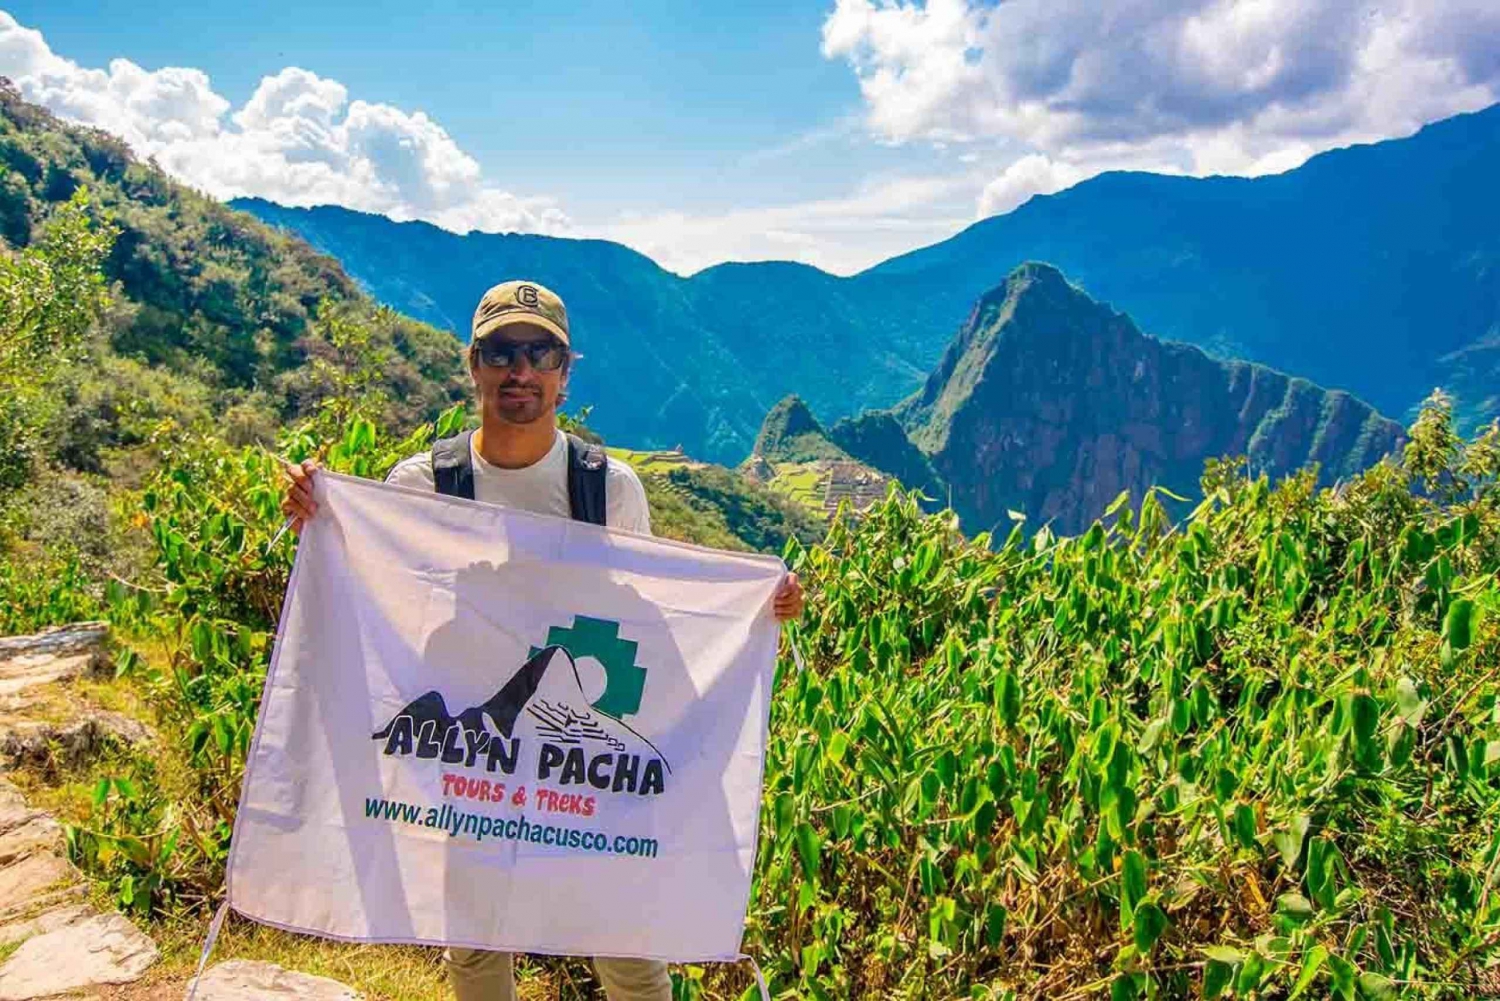 Utforska Machu Picchu: Inkaleden 2 dagar